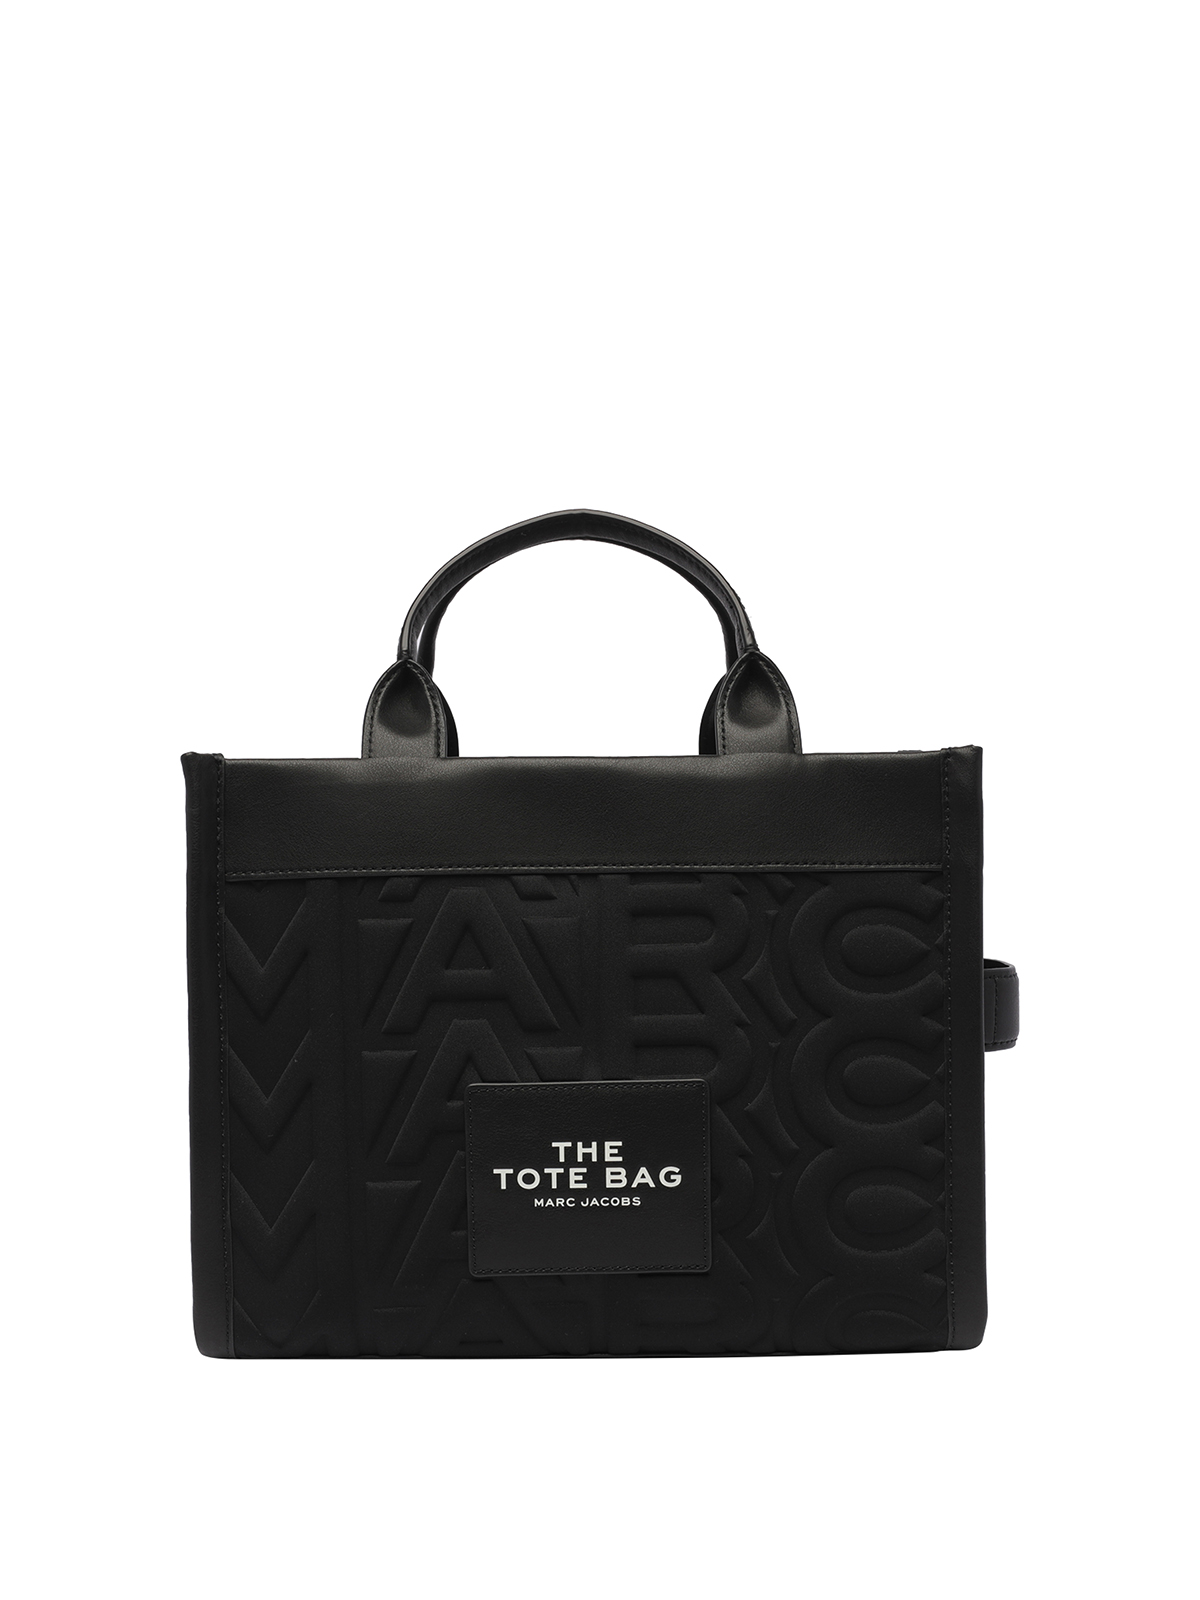 Marc Jacobs The Monogram Neoprene Large Tote Bag